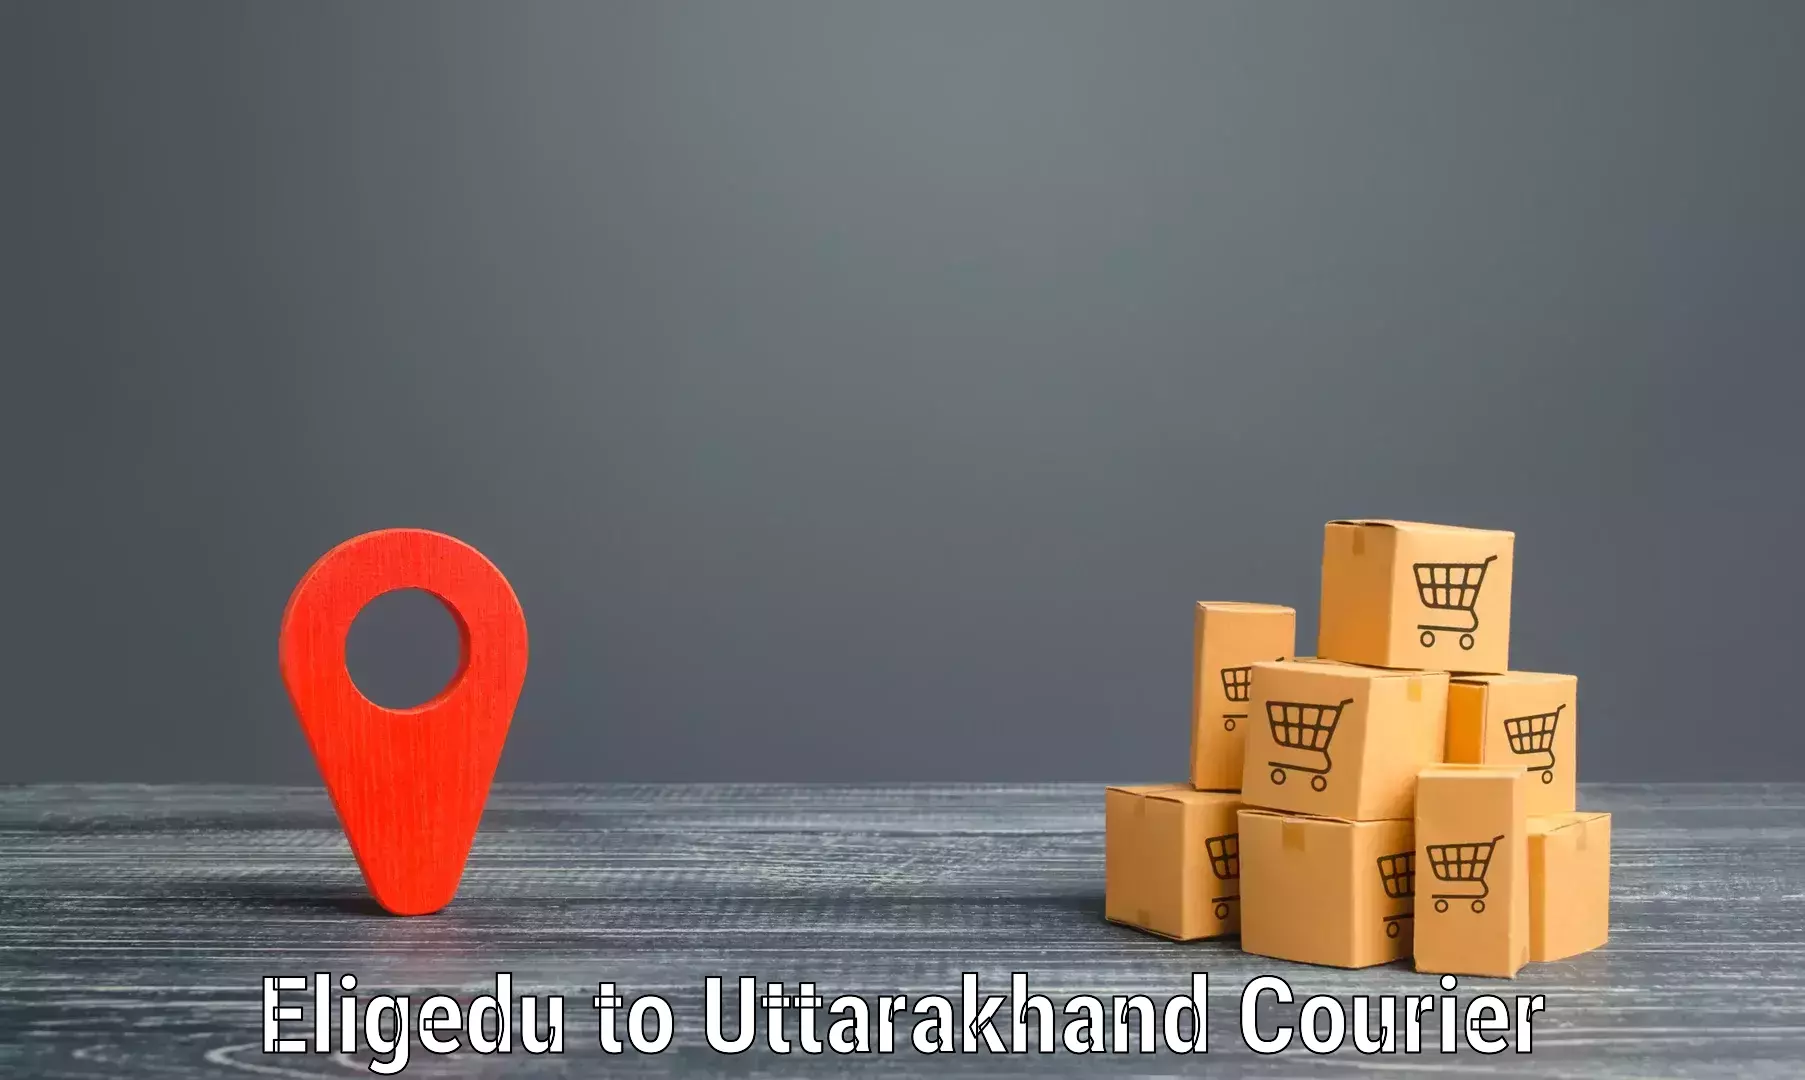 Package forwarding in Eligedu to Dwarahat